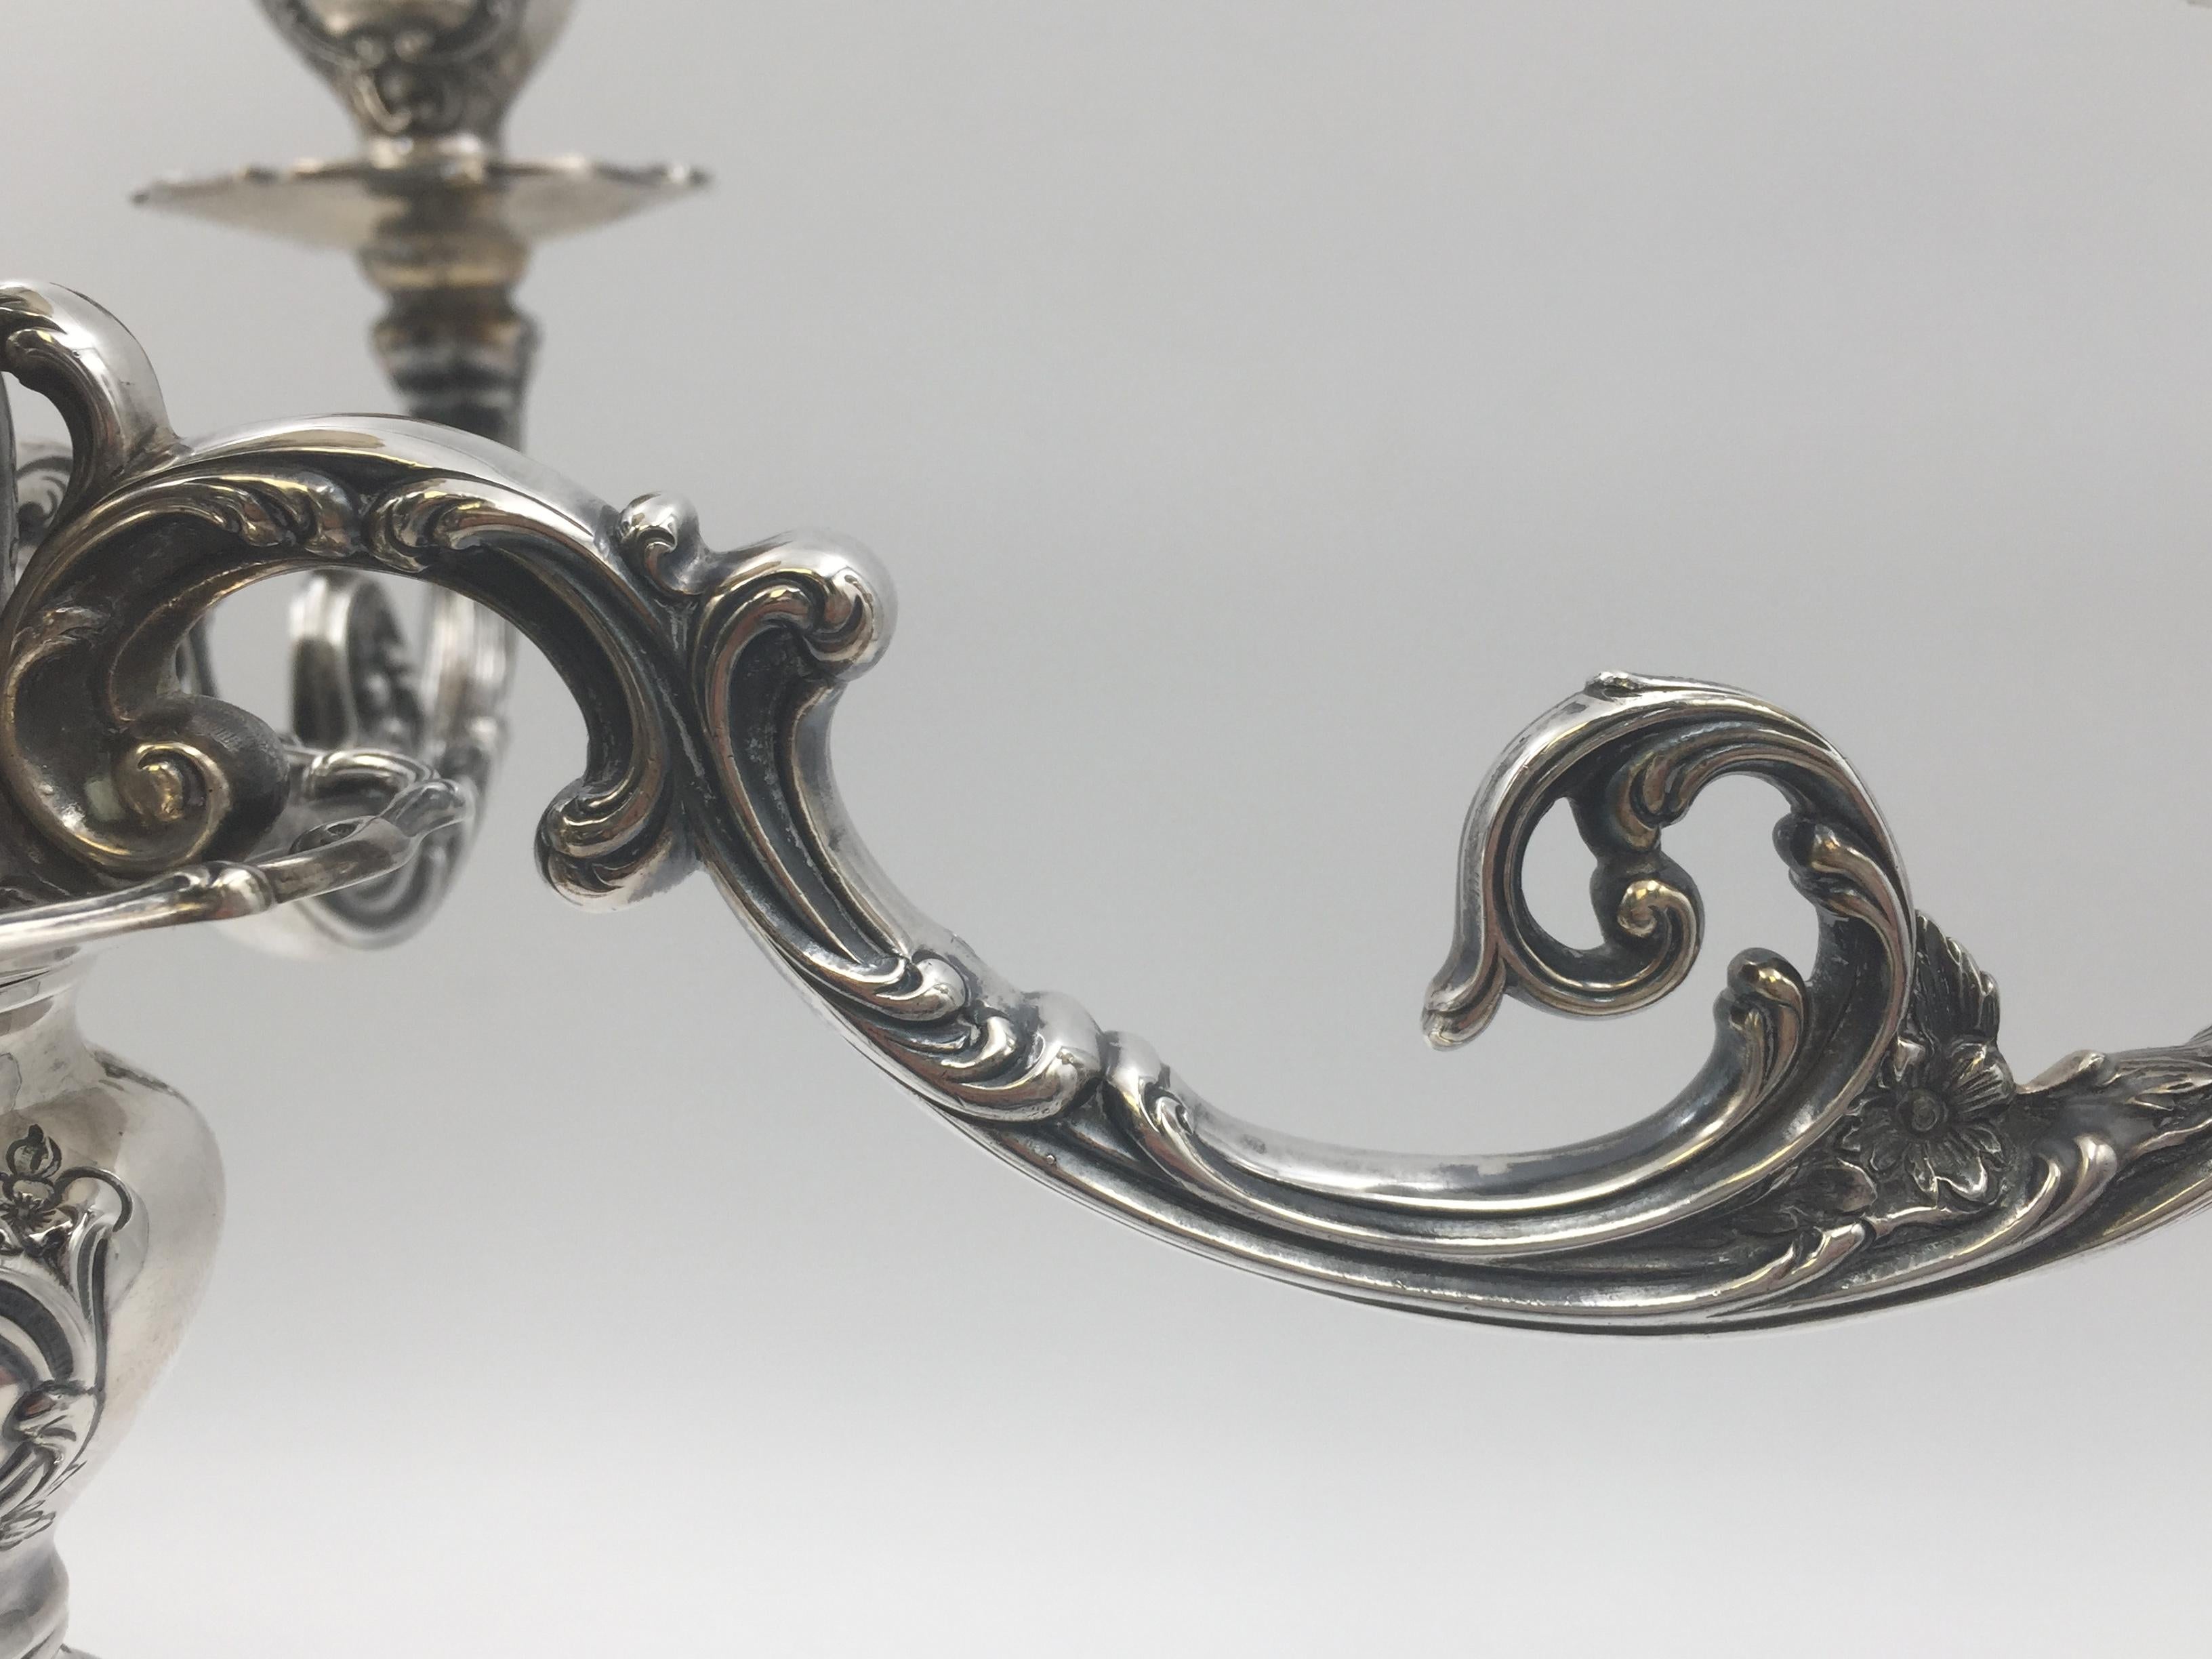 American Gorham Five-Light Sterling Silver Candelabra in Chantilly Pattern